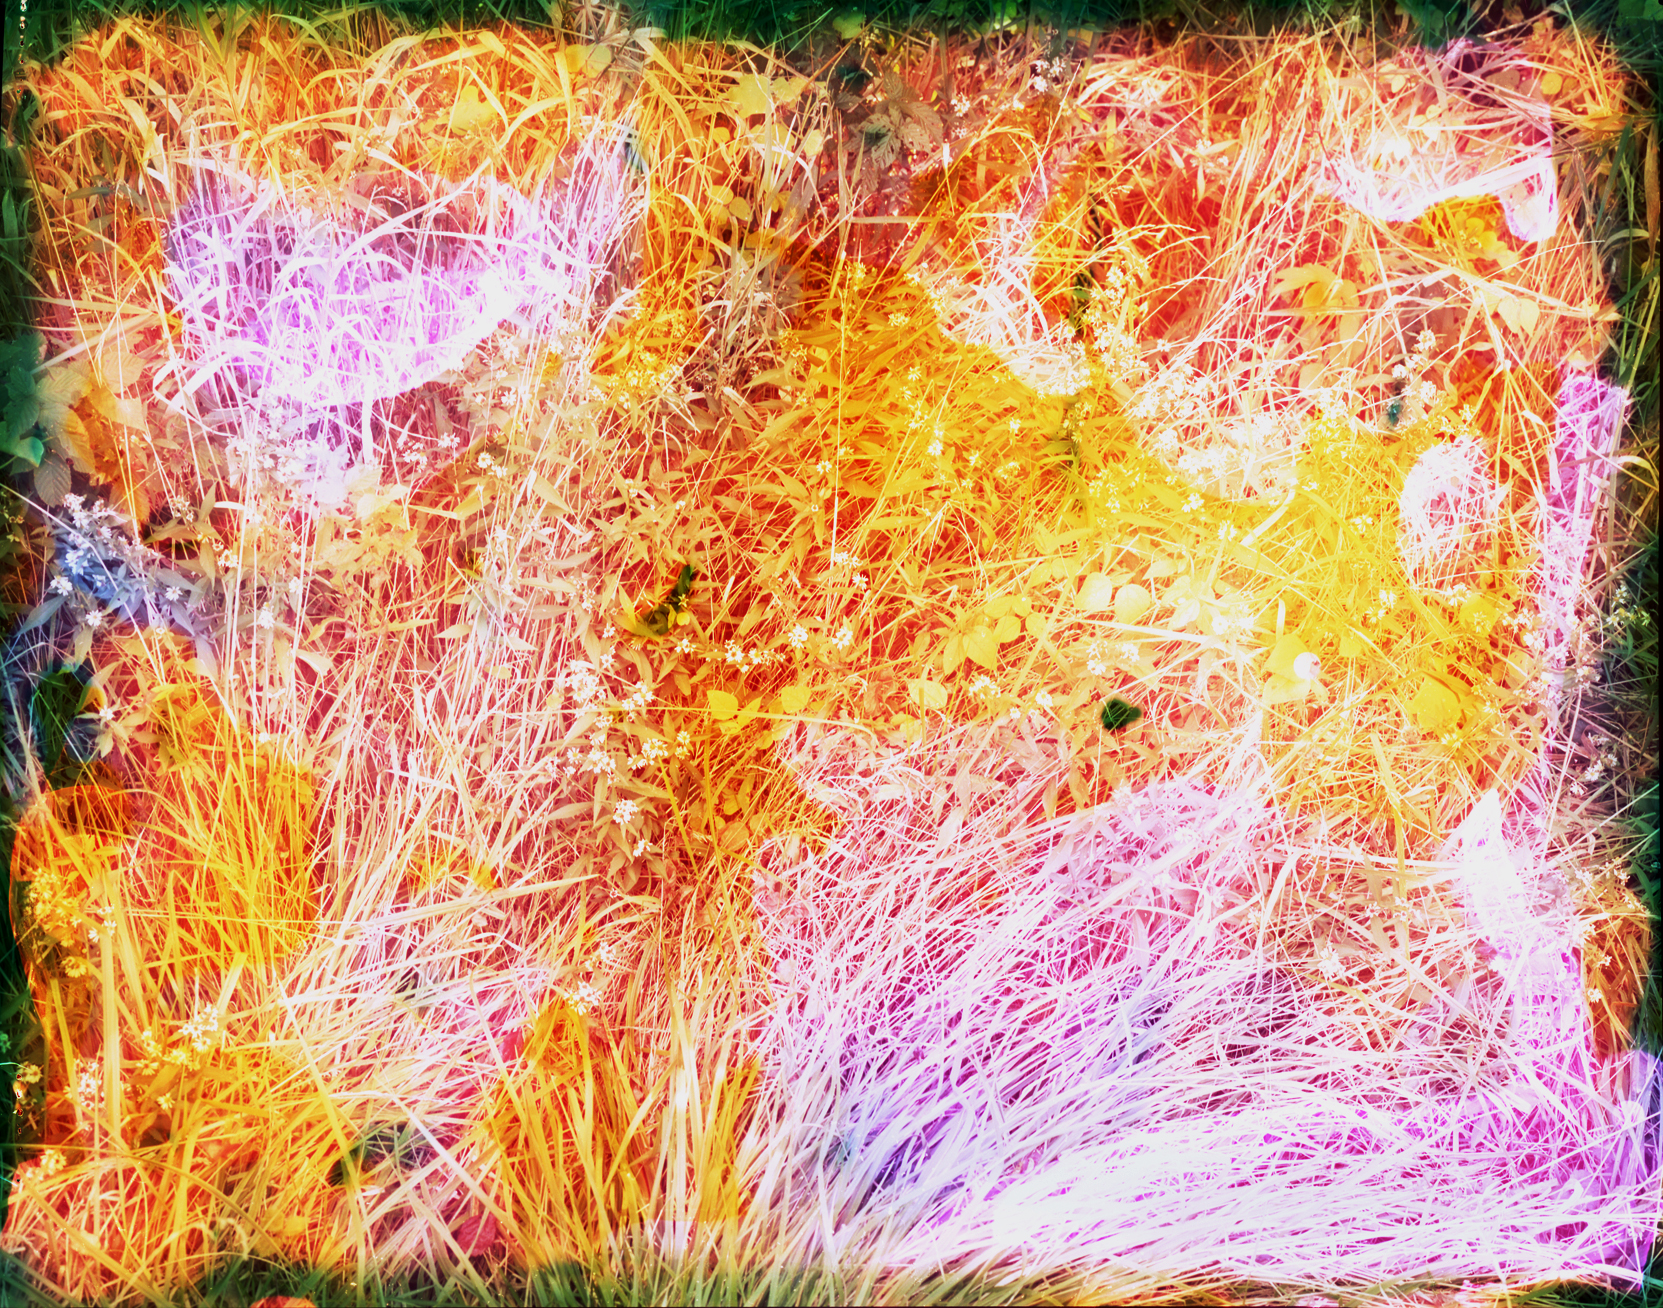 Reenactment 101 (Lavender Grass), 32 x 40 in, 2014